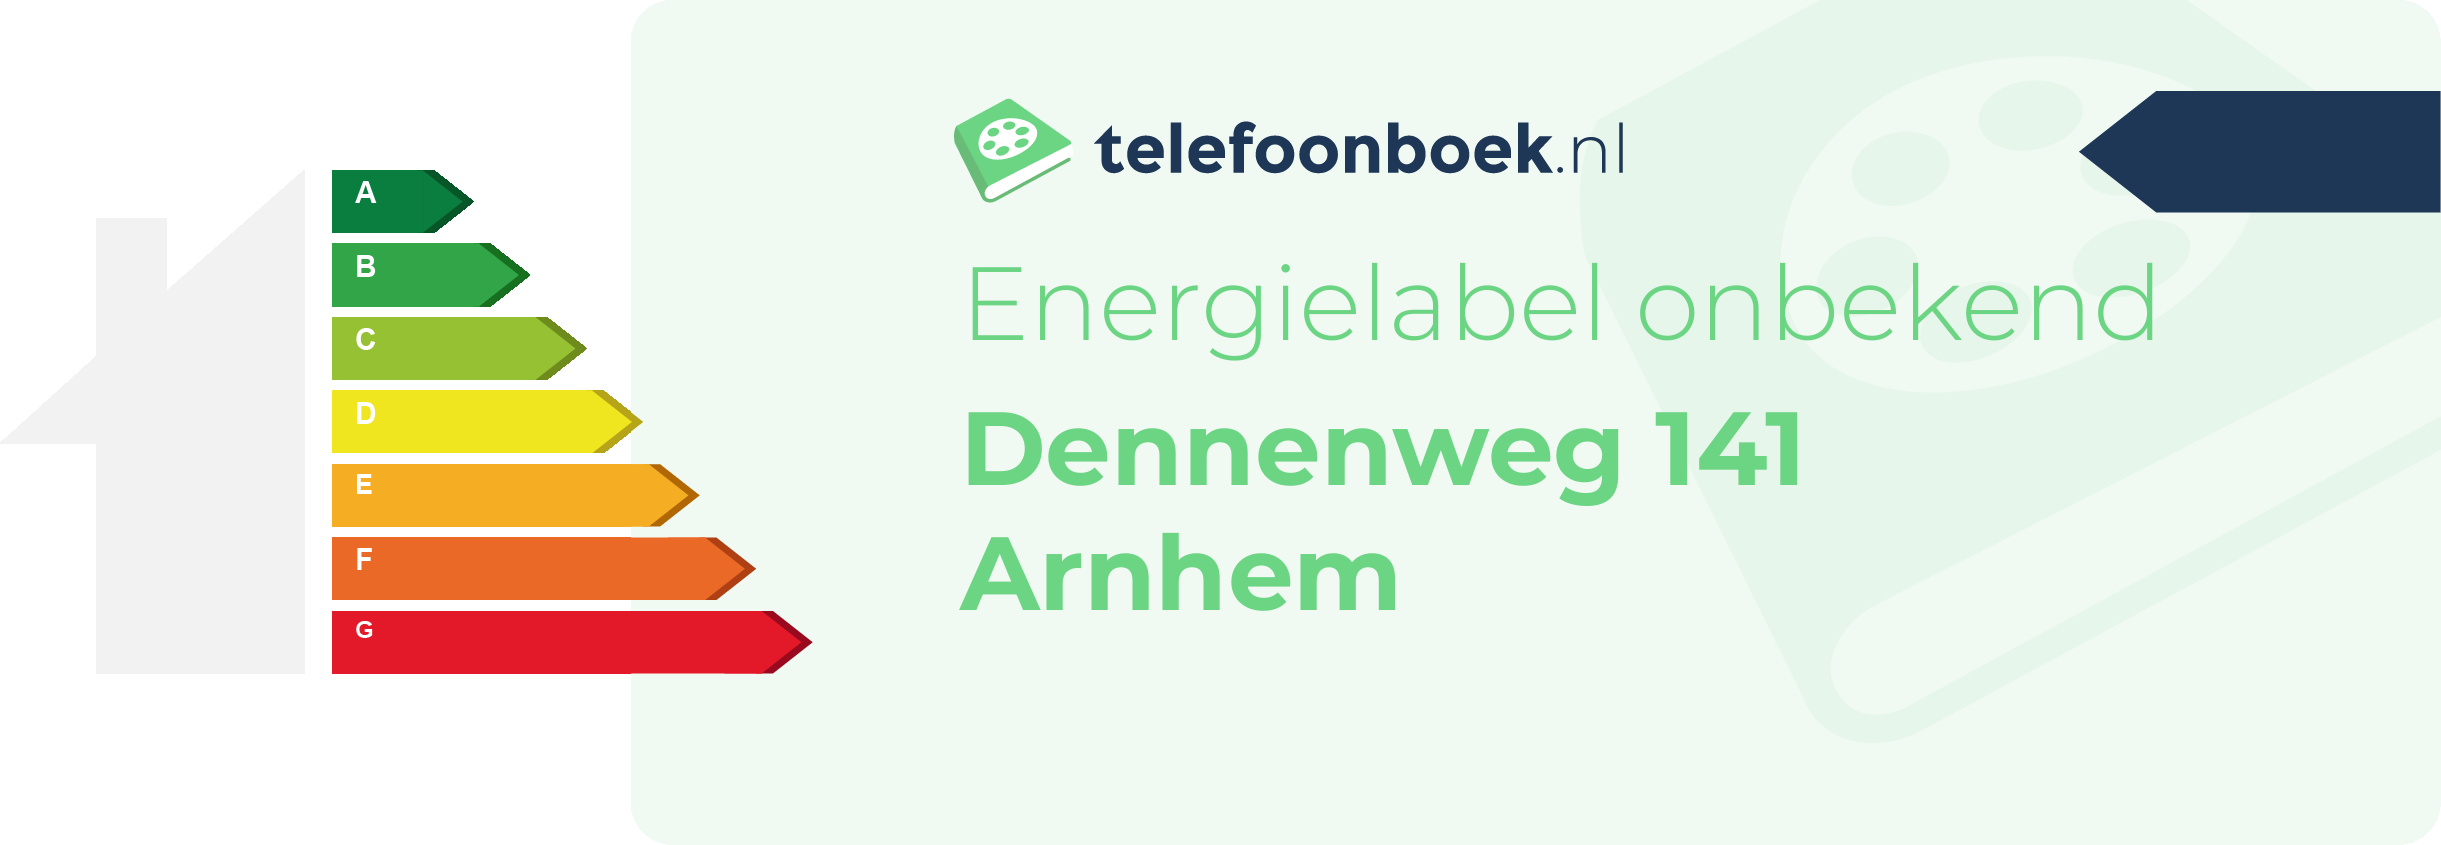 Energielabel Dennenweg 141 Arnhem